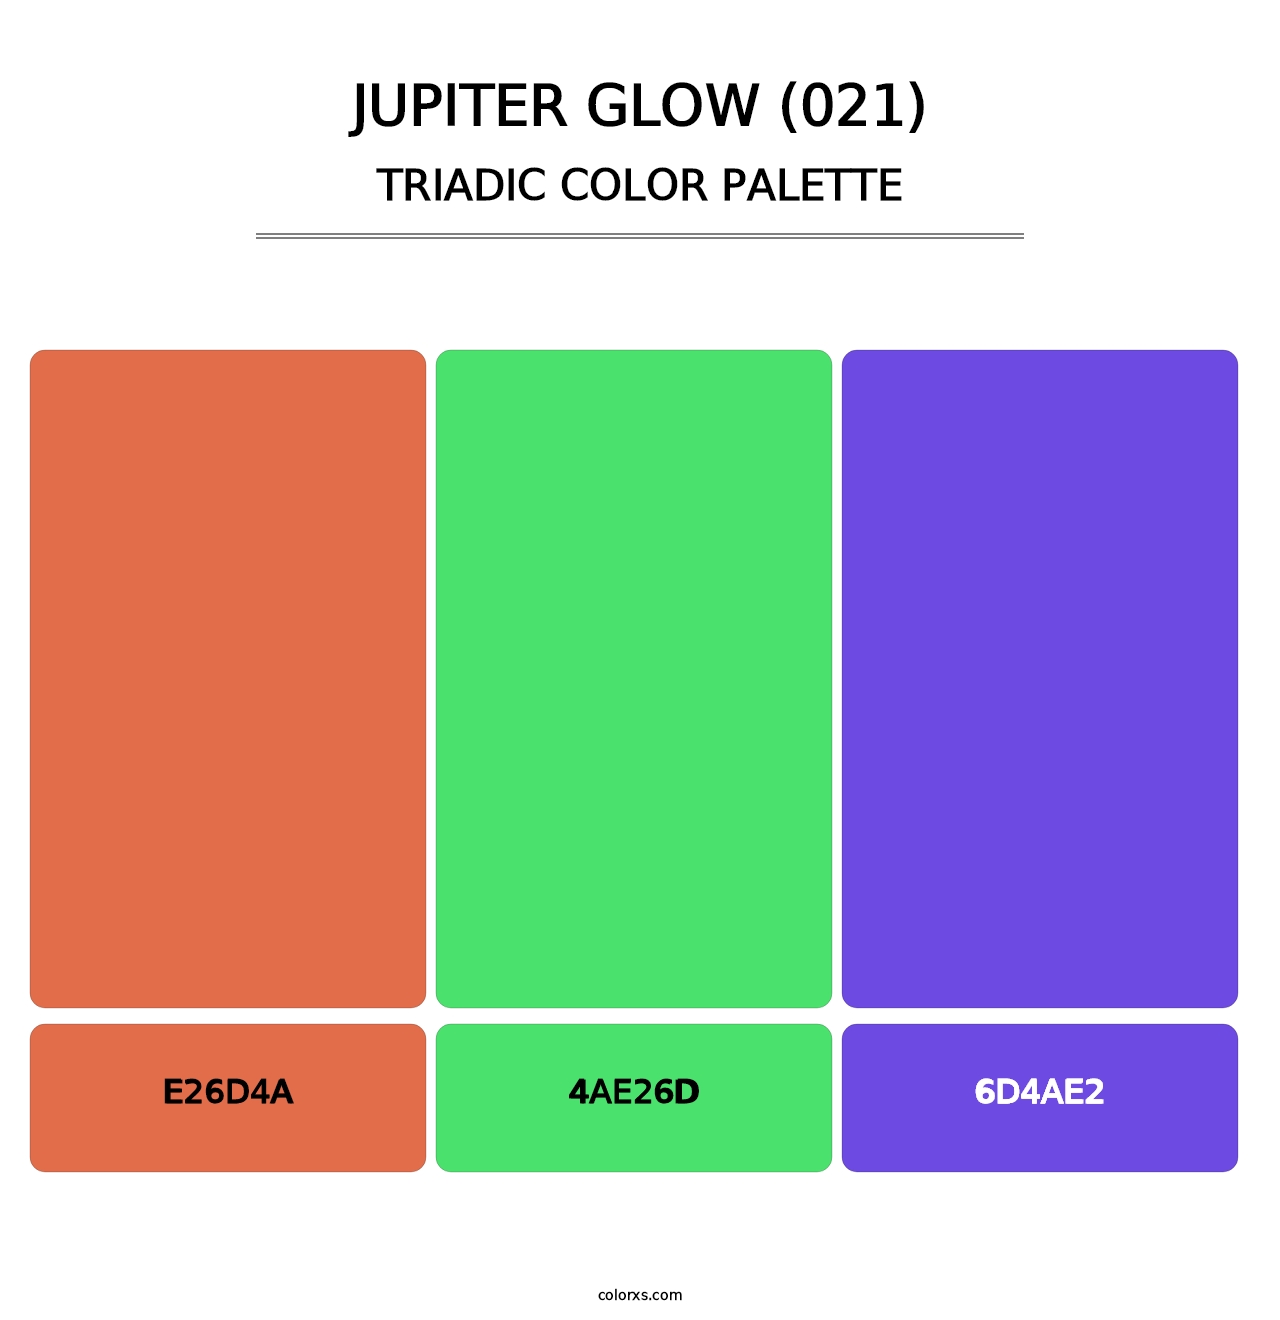 Jupiter Glow (021) - Triadic Color Palette